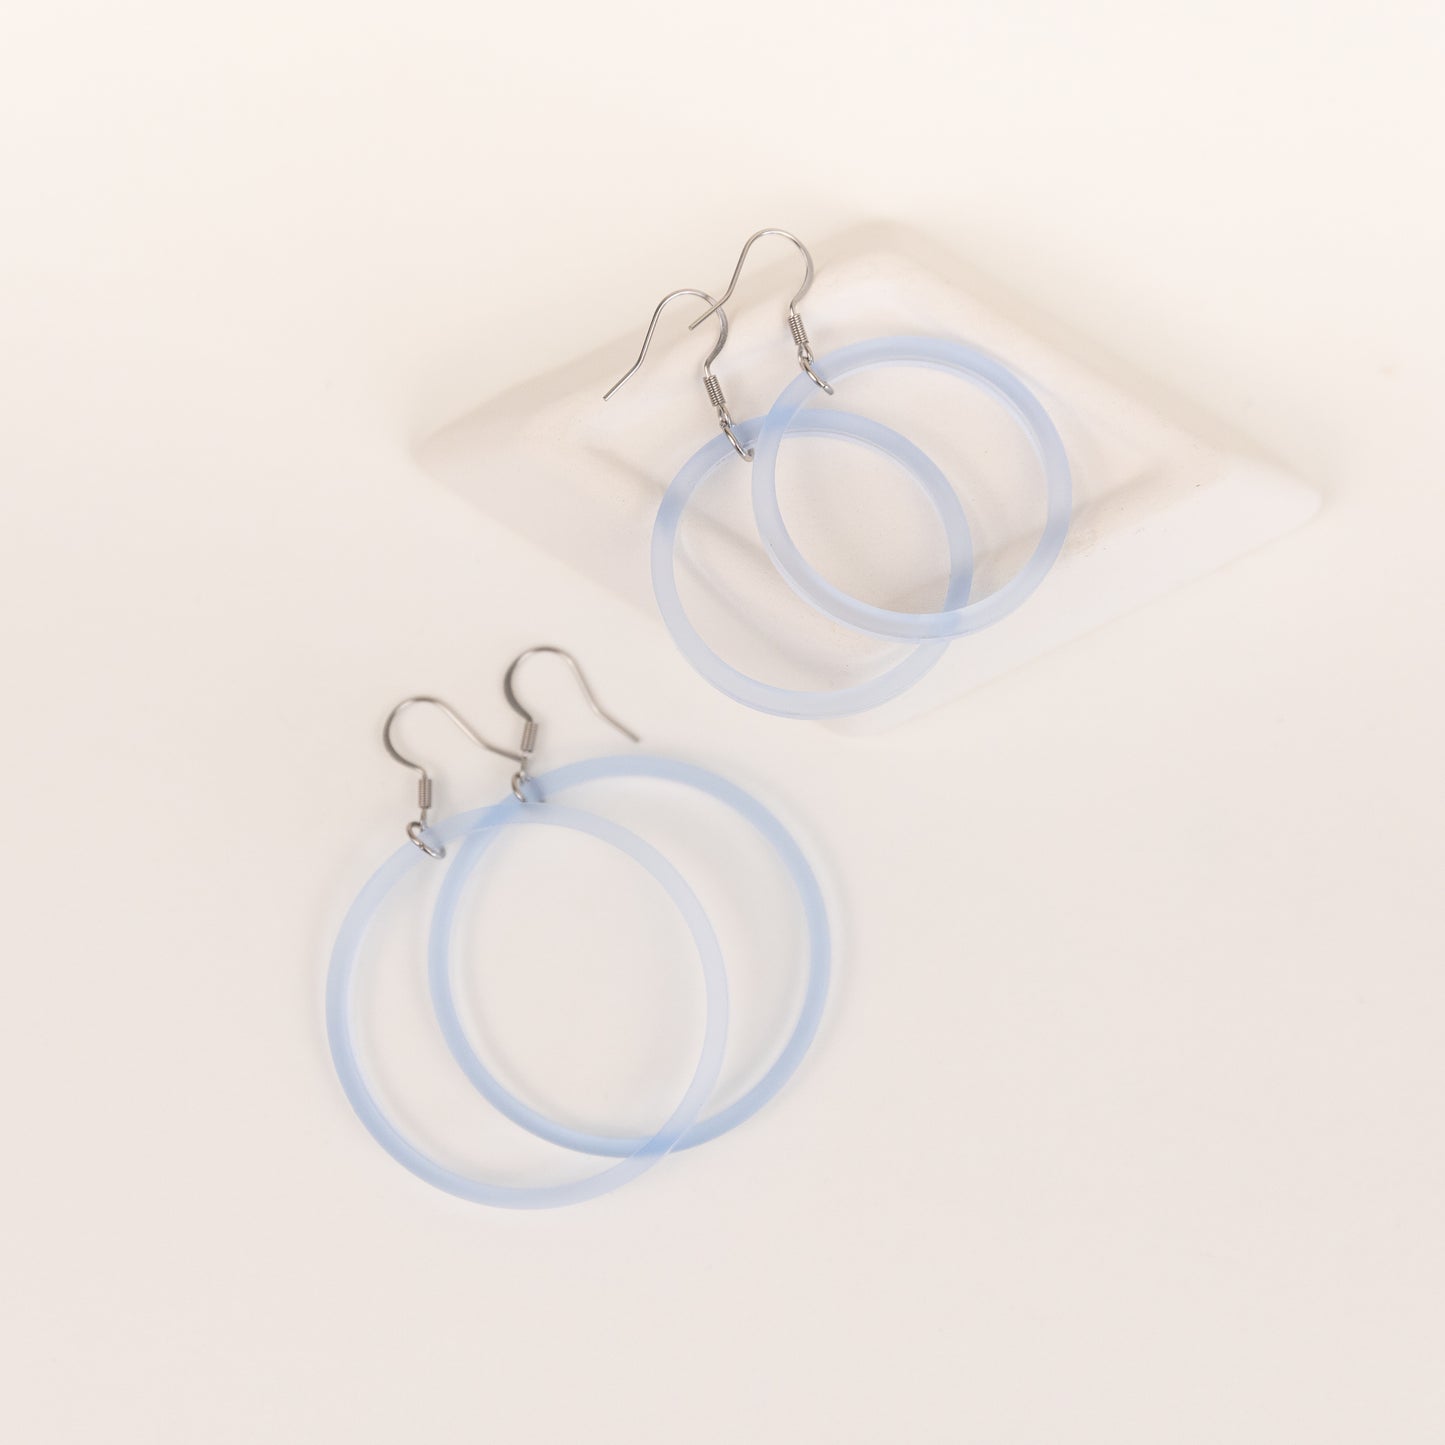 THE STAPLE HOOP in Sheer Ice Blue/ Lightweight Acrylic Statement Earrings